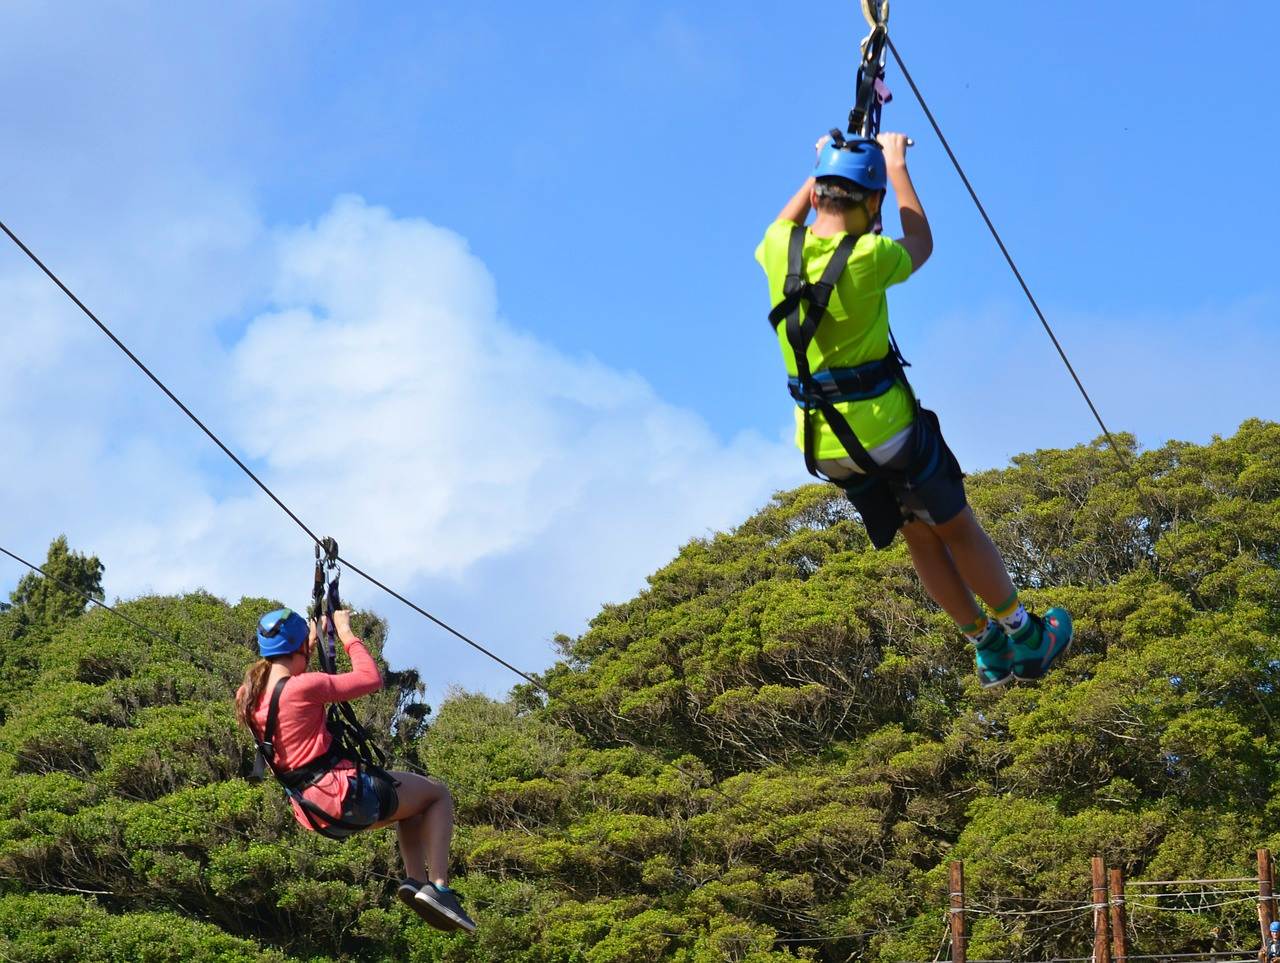 Ziplining in Hawaii - ecotourism experience